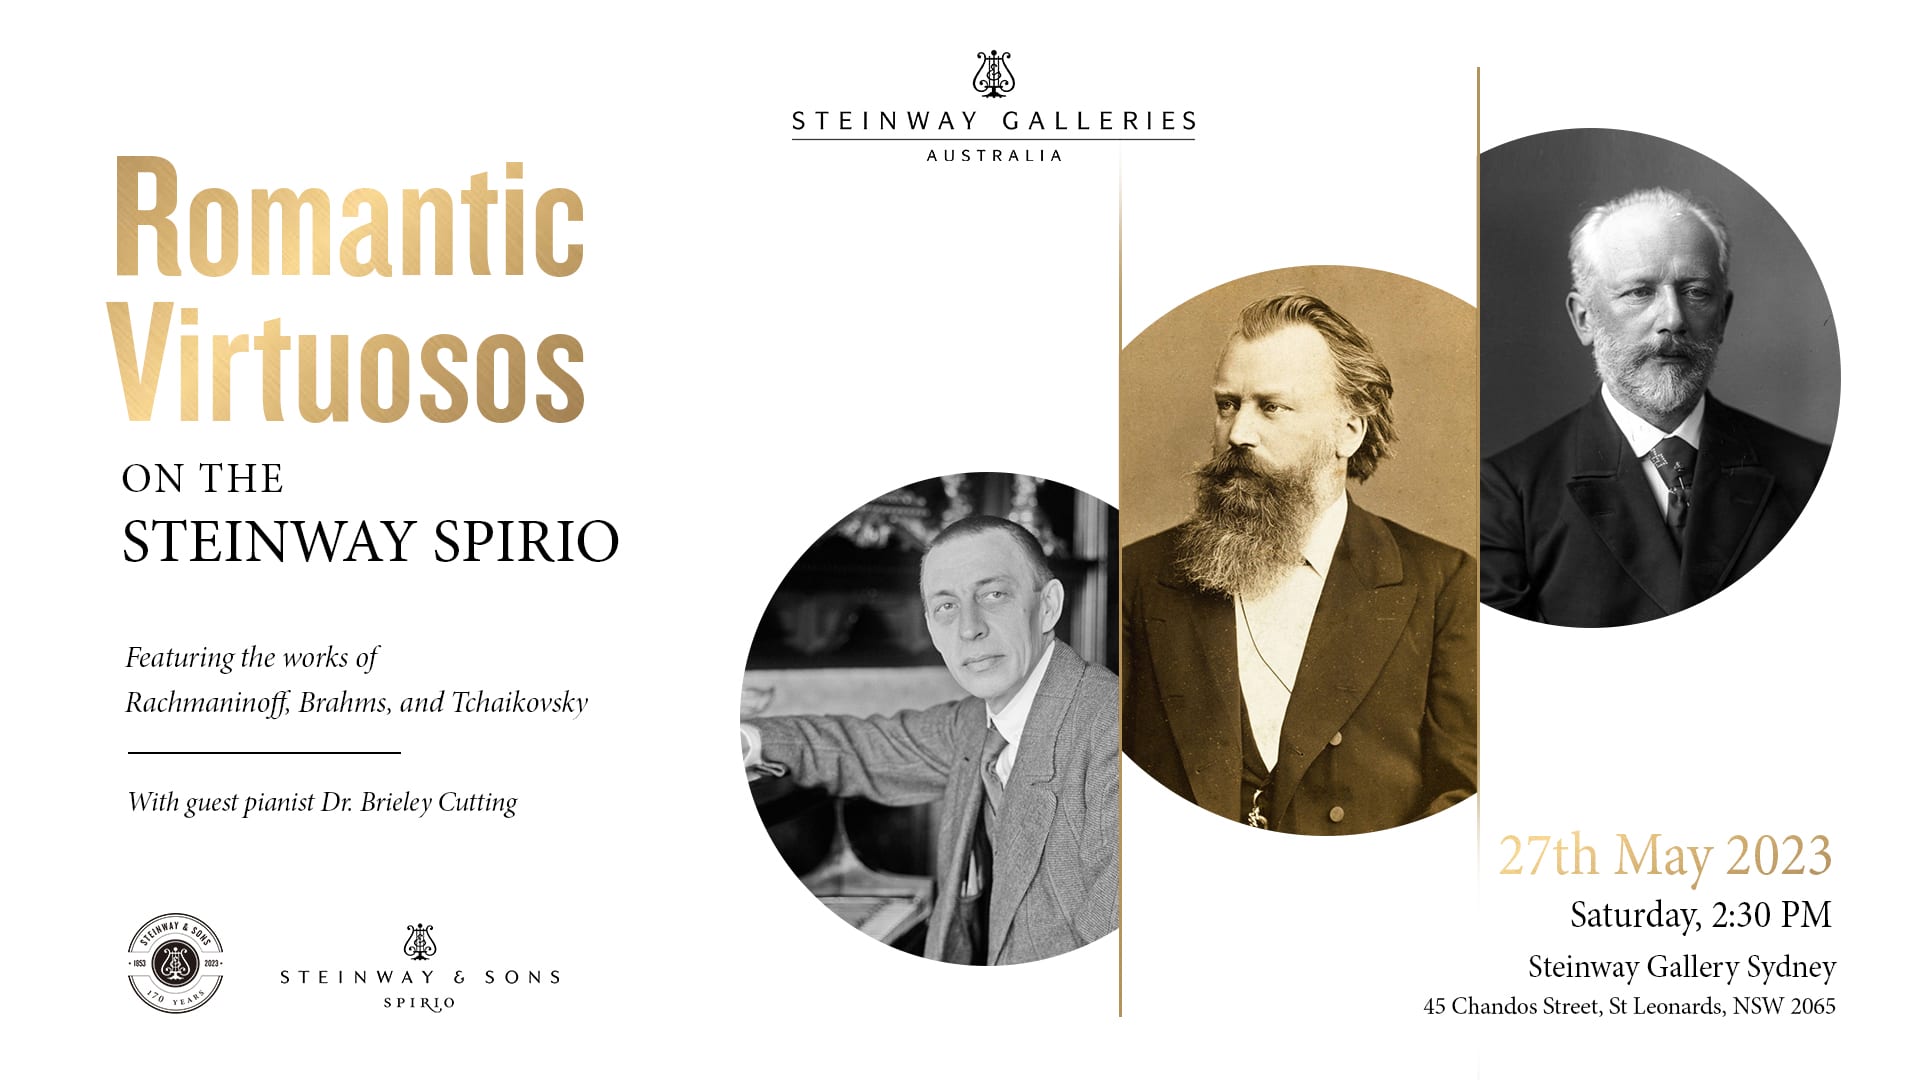 Spirio Romantic Virtuosos Event at Steinway Gallery Sydney